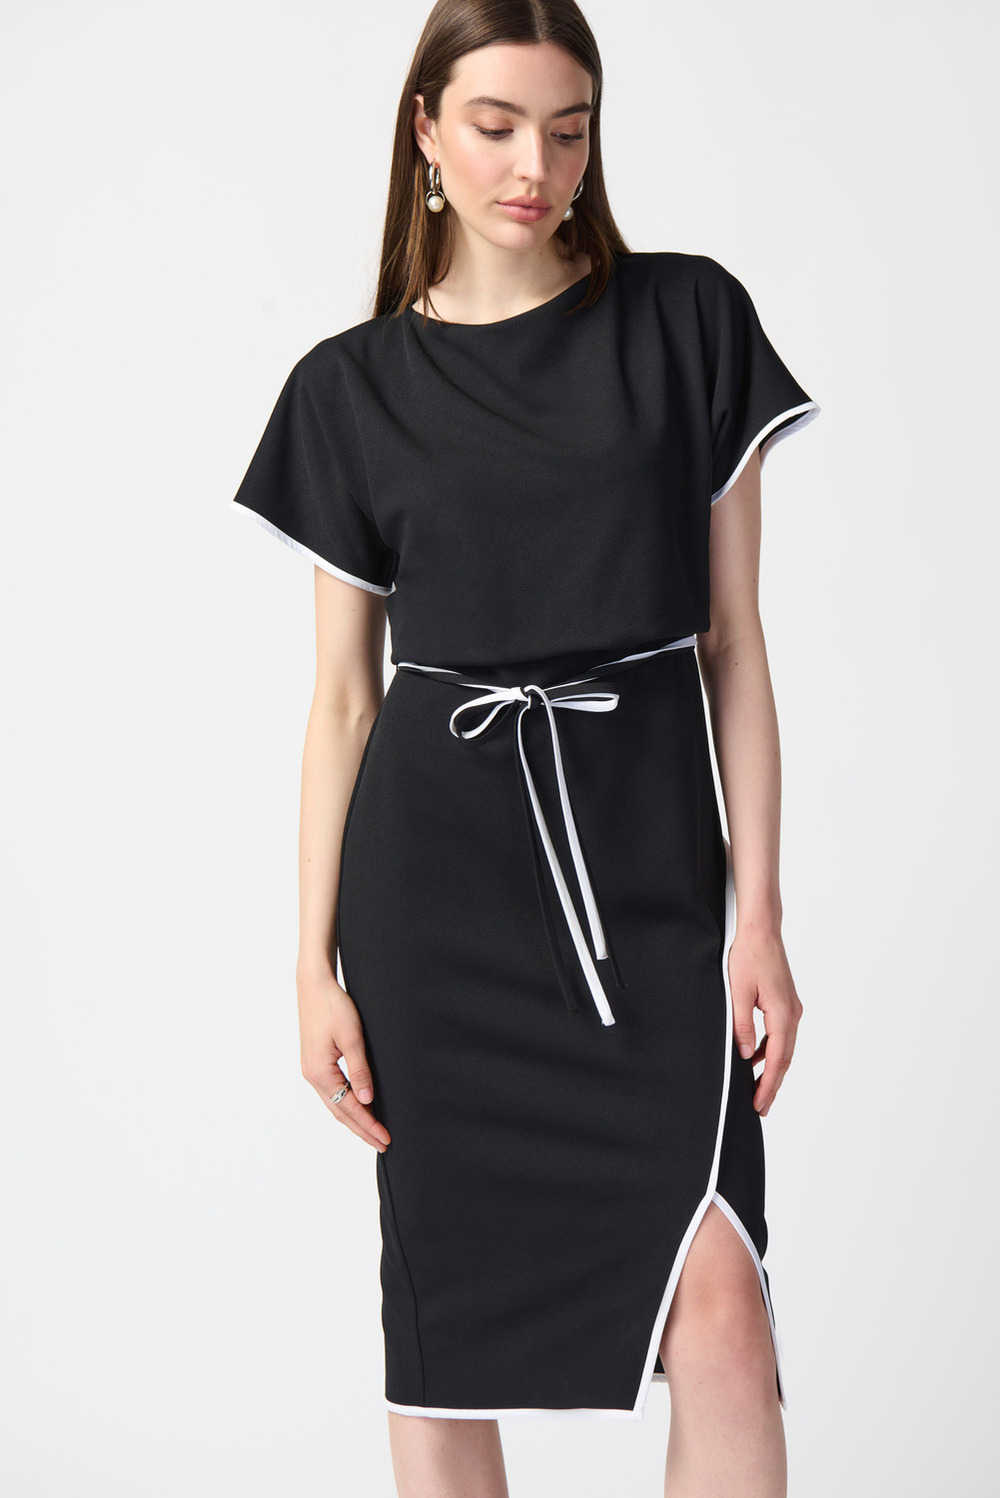 Two-Tone Slit Dress Style 241234. Black/off White